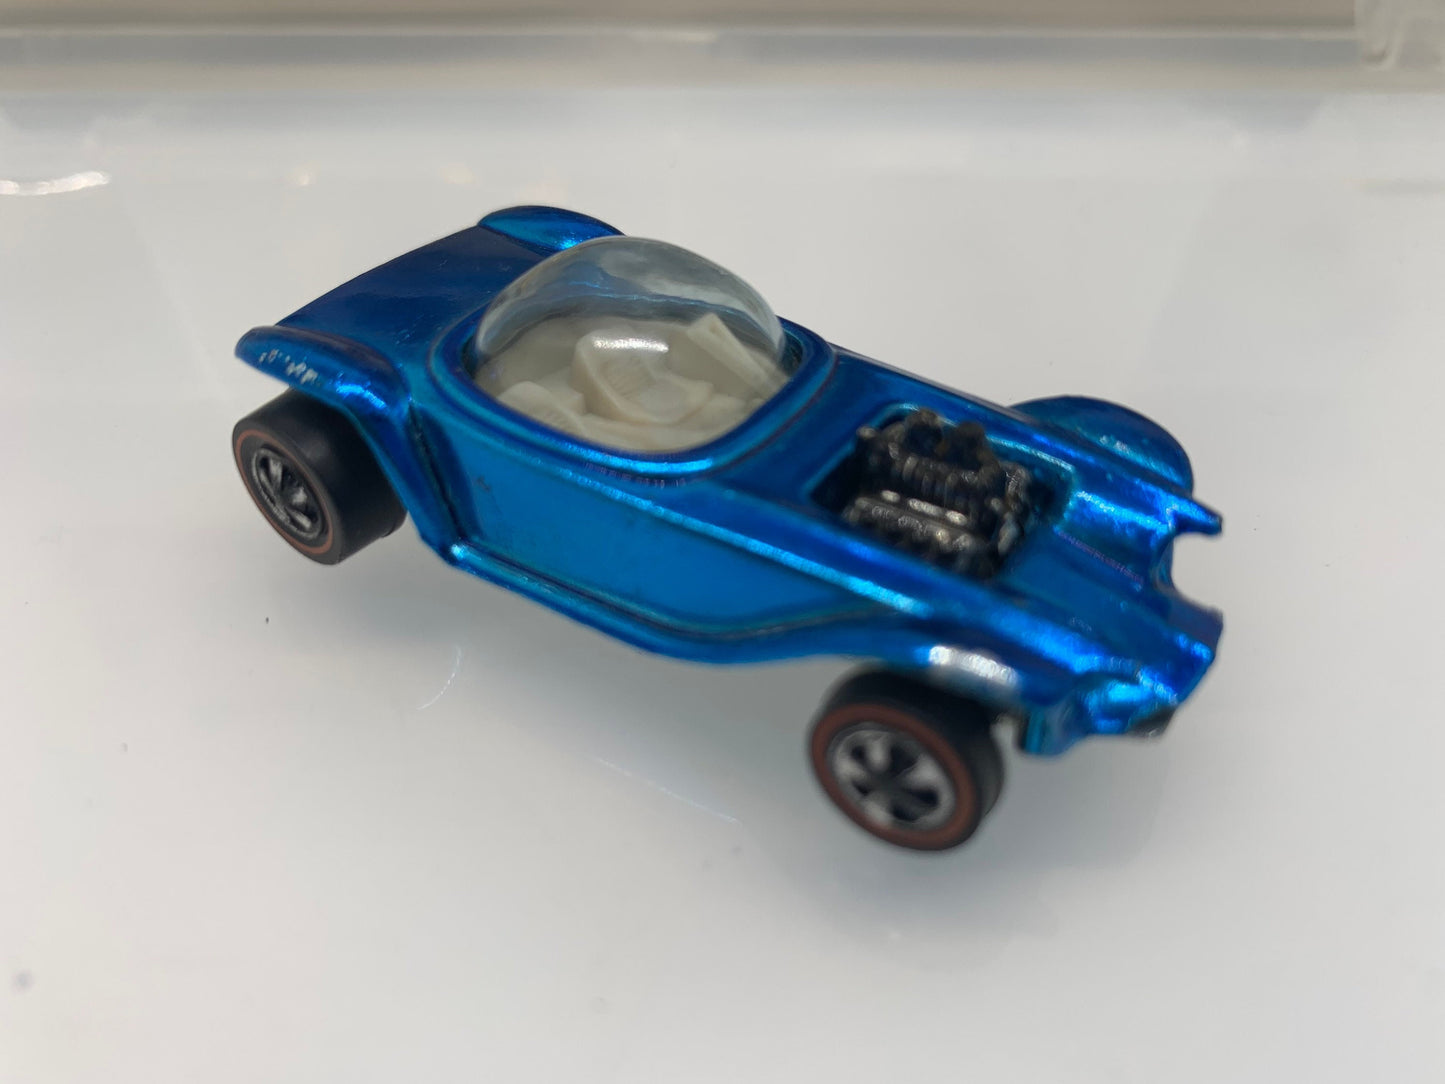 Hot Wheels Redline Beatnik Bandit Blue - 1960s Toy - Vintage Diecast Metal Toy Car - Vintage Hot Wheels